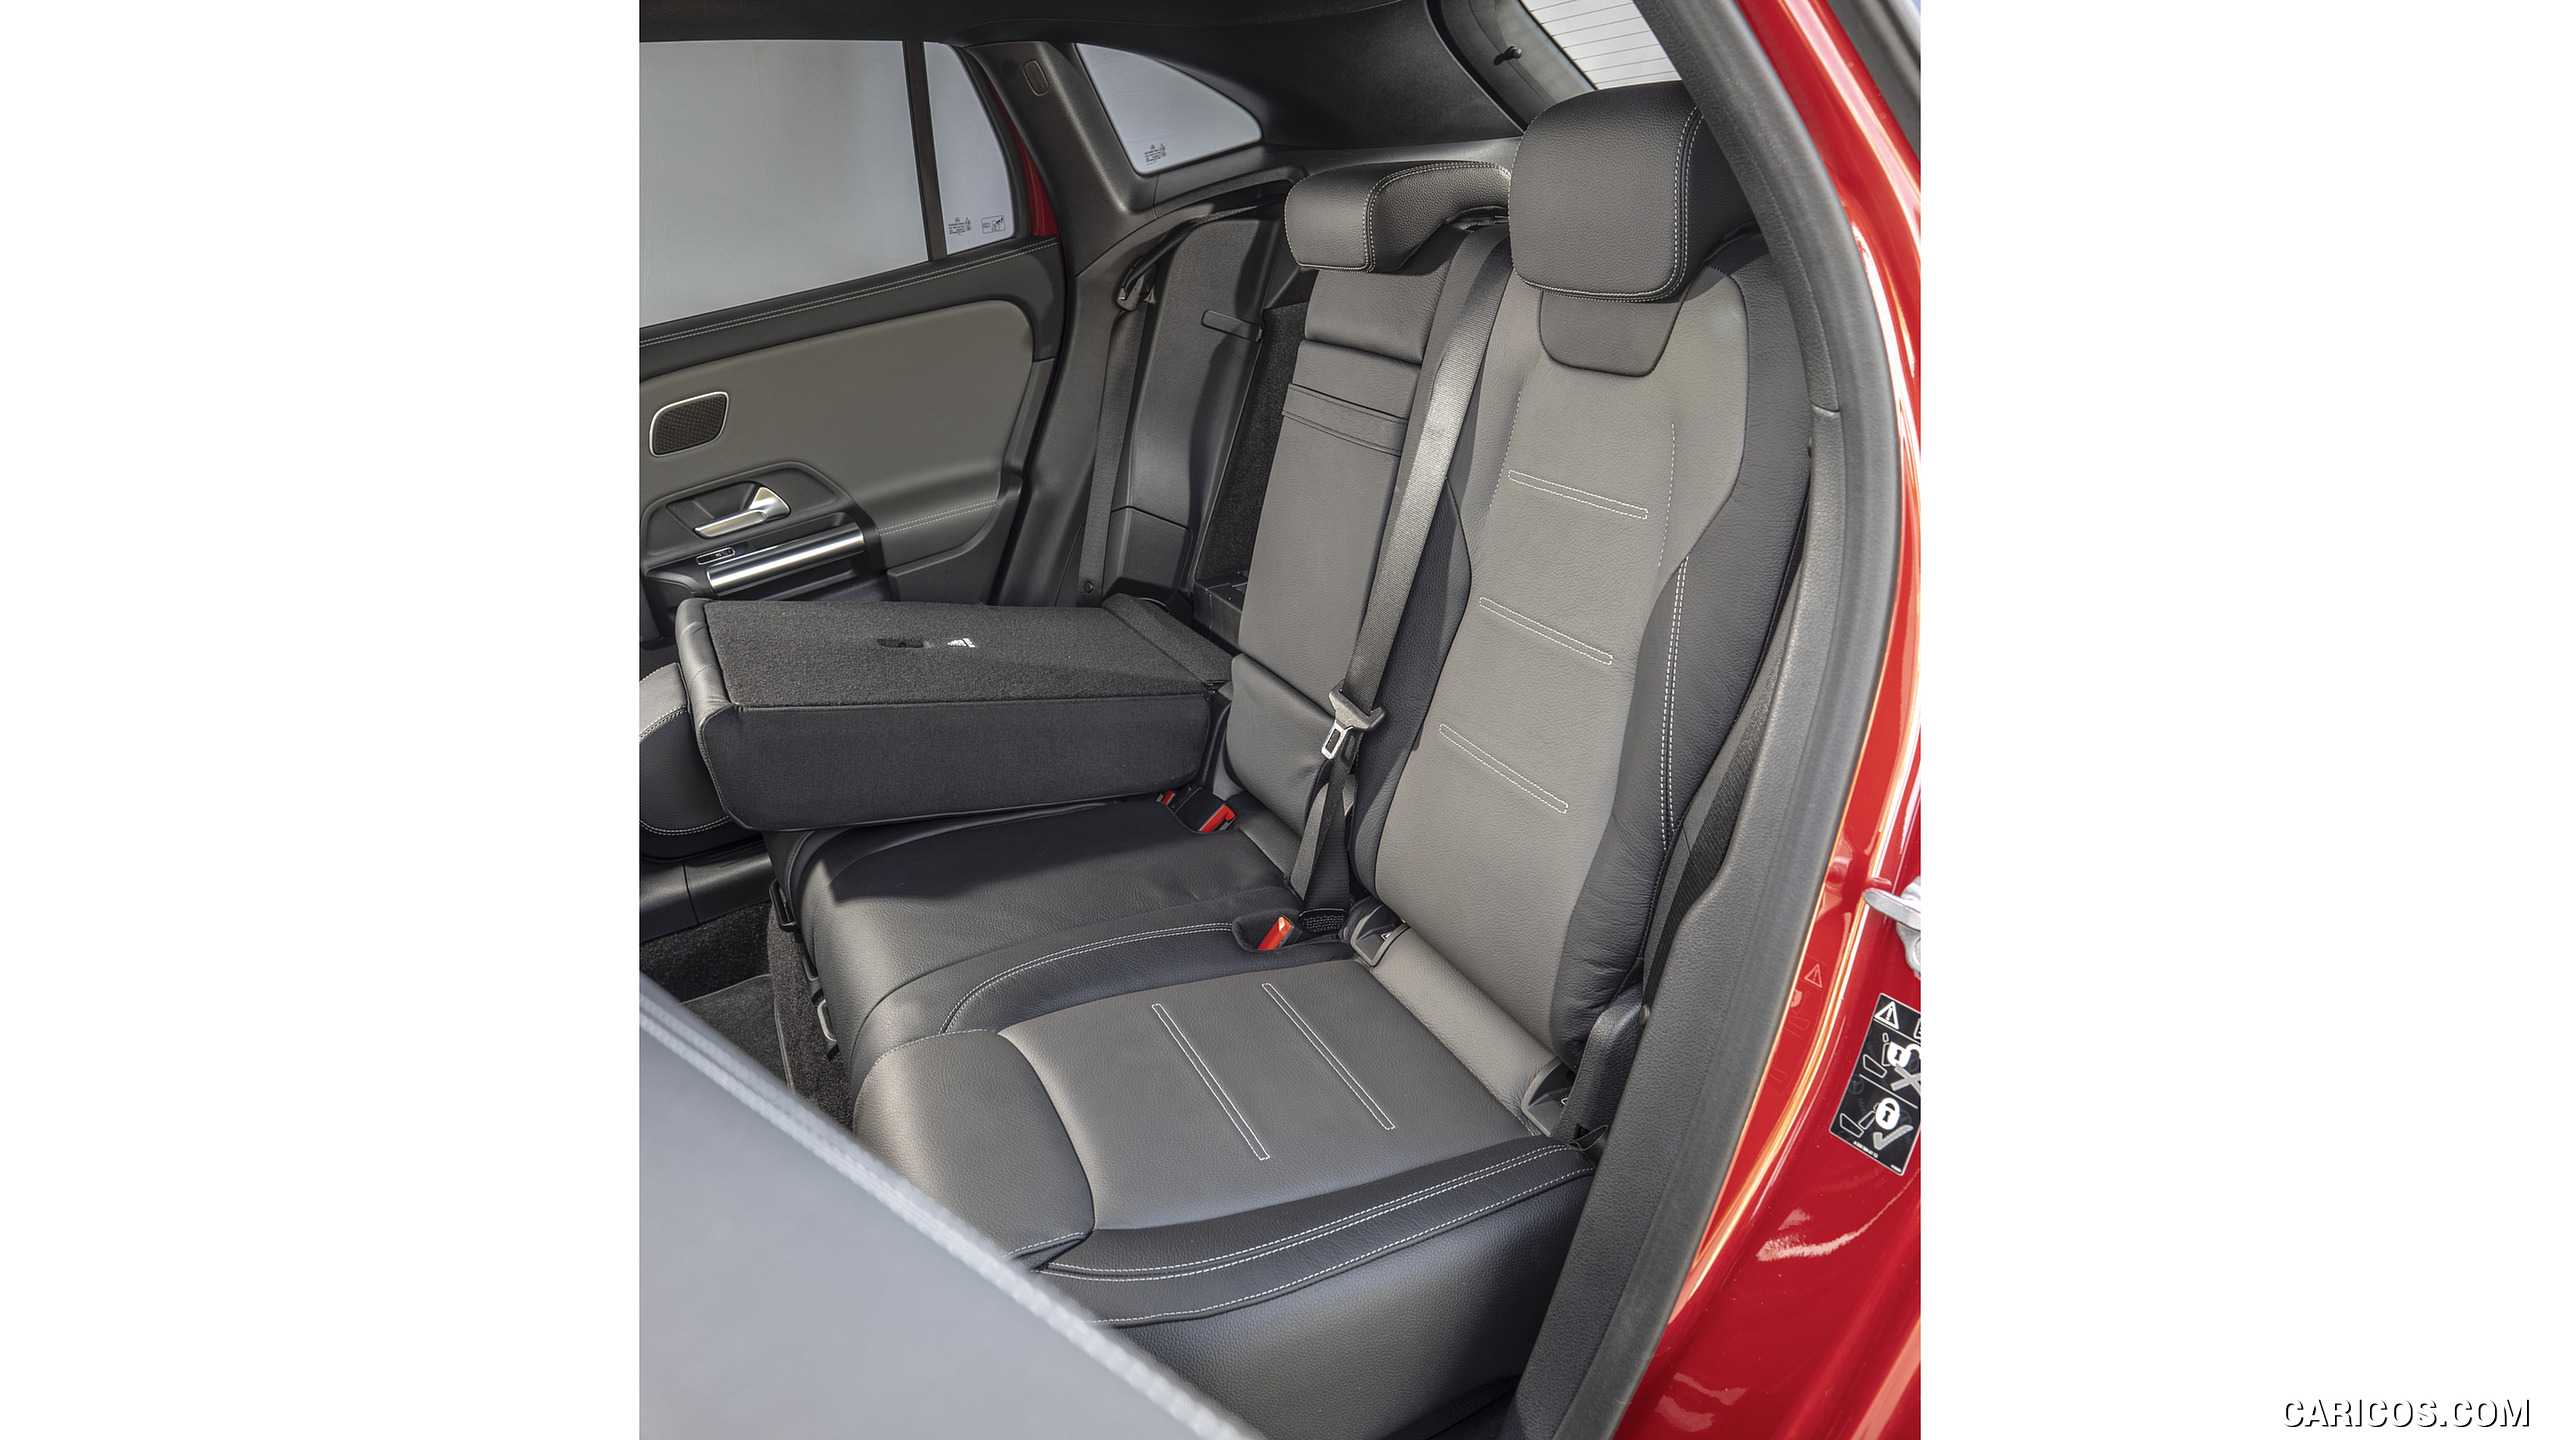 2021 Mercedes-AMG GLA 35 4MATIC - Interior, Rear Seats, #62 of 104